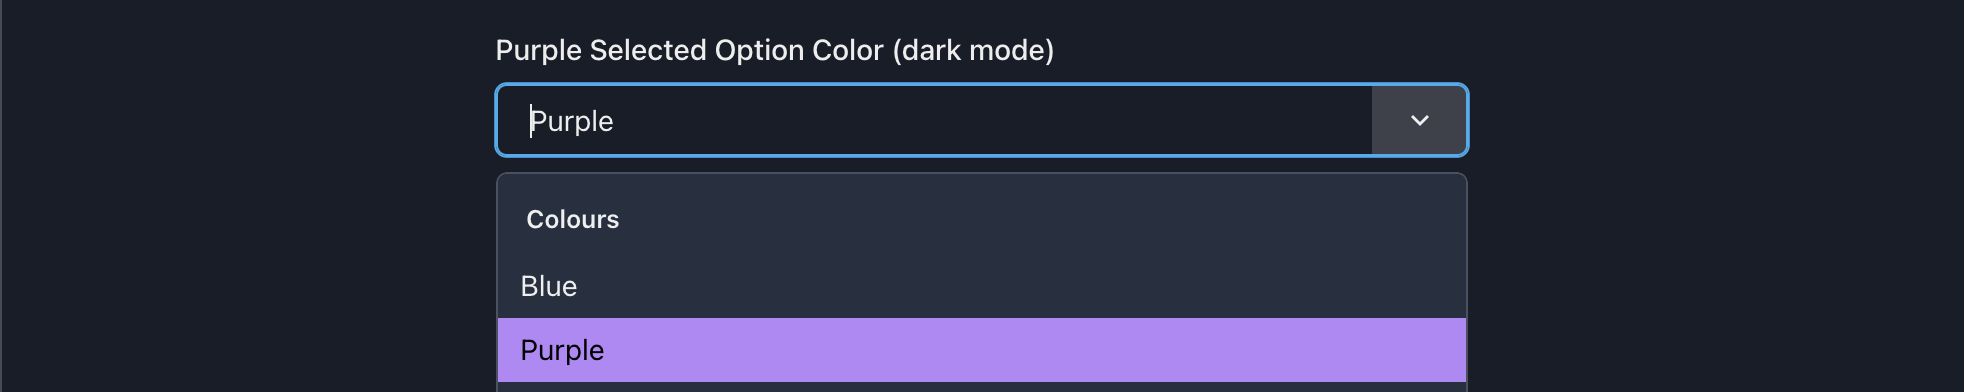 Purple Selected Option Color (dark mode)